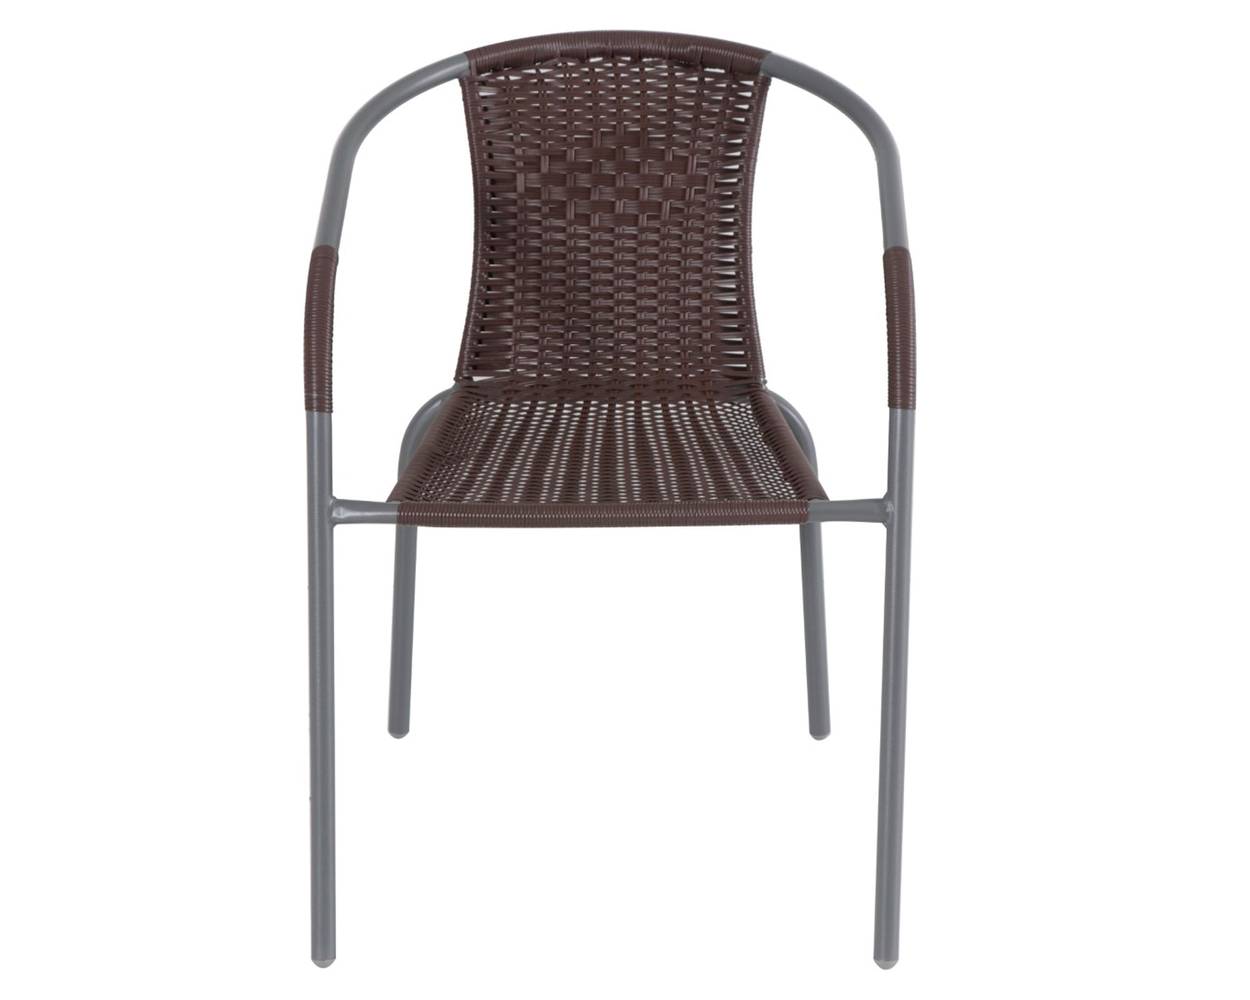 Outzen silla de caño metalico (1 u)